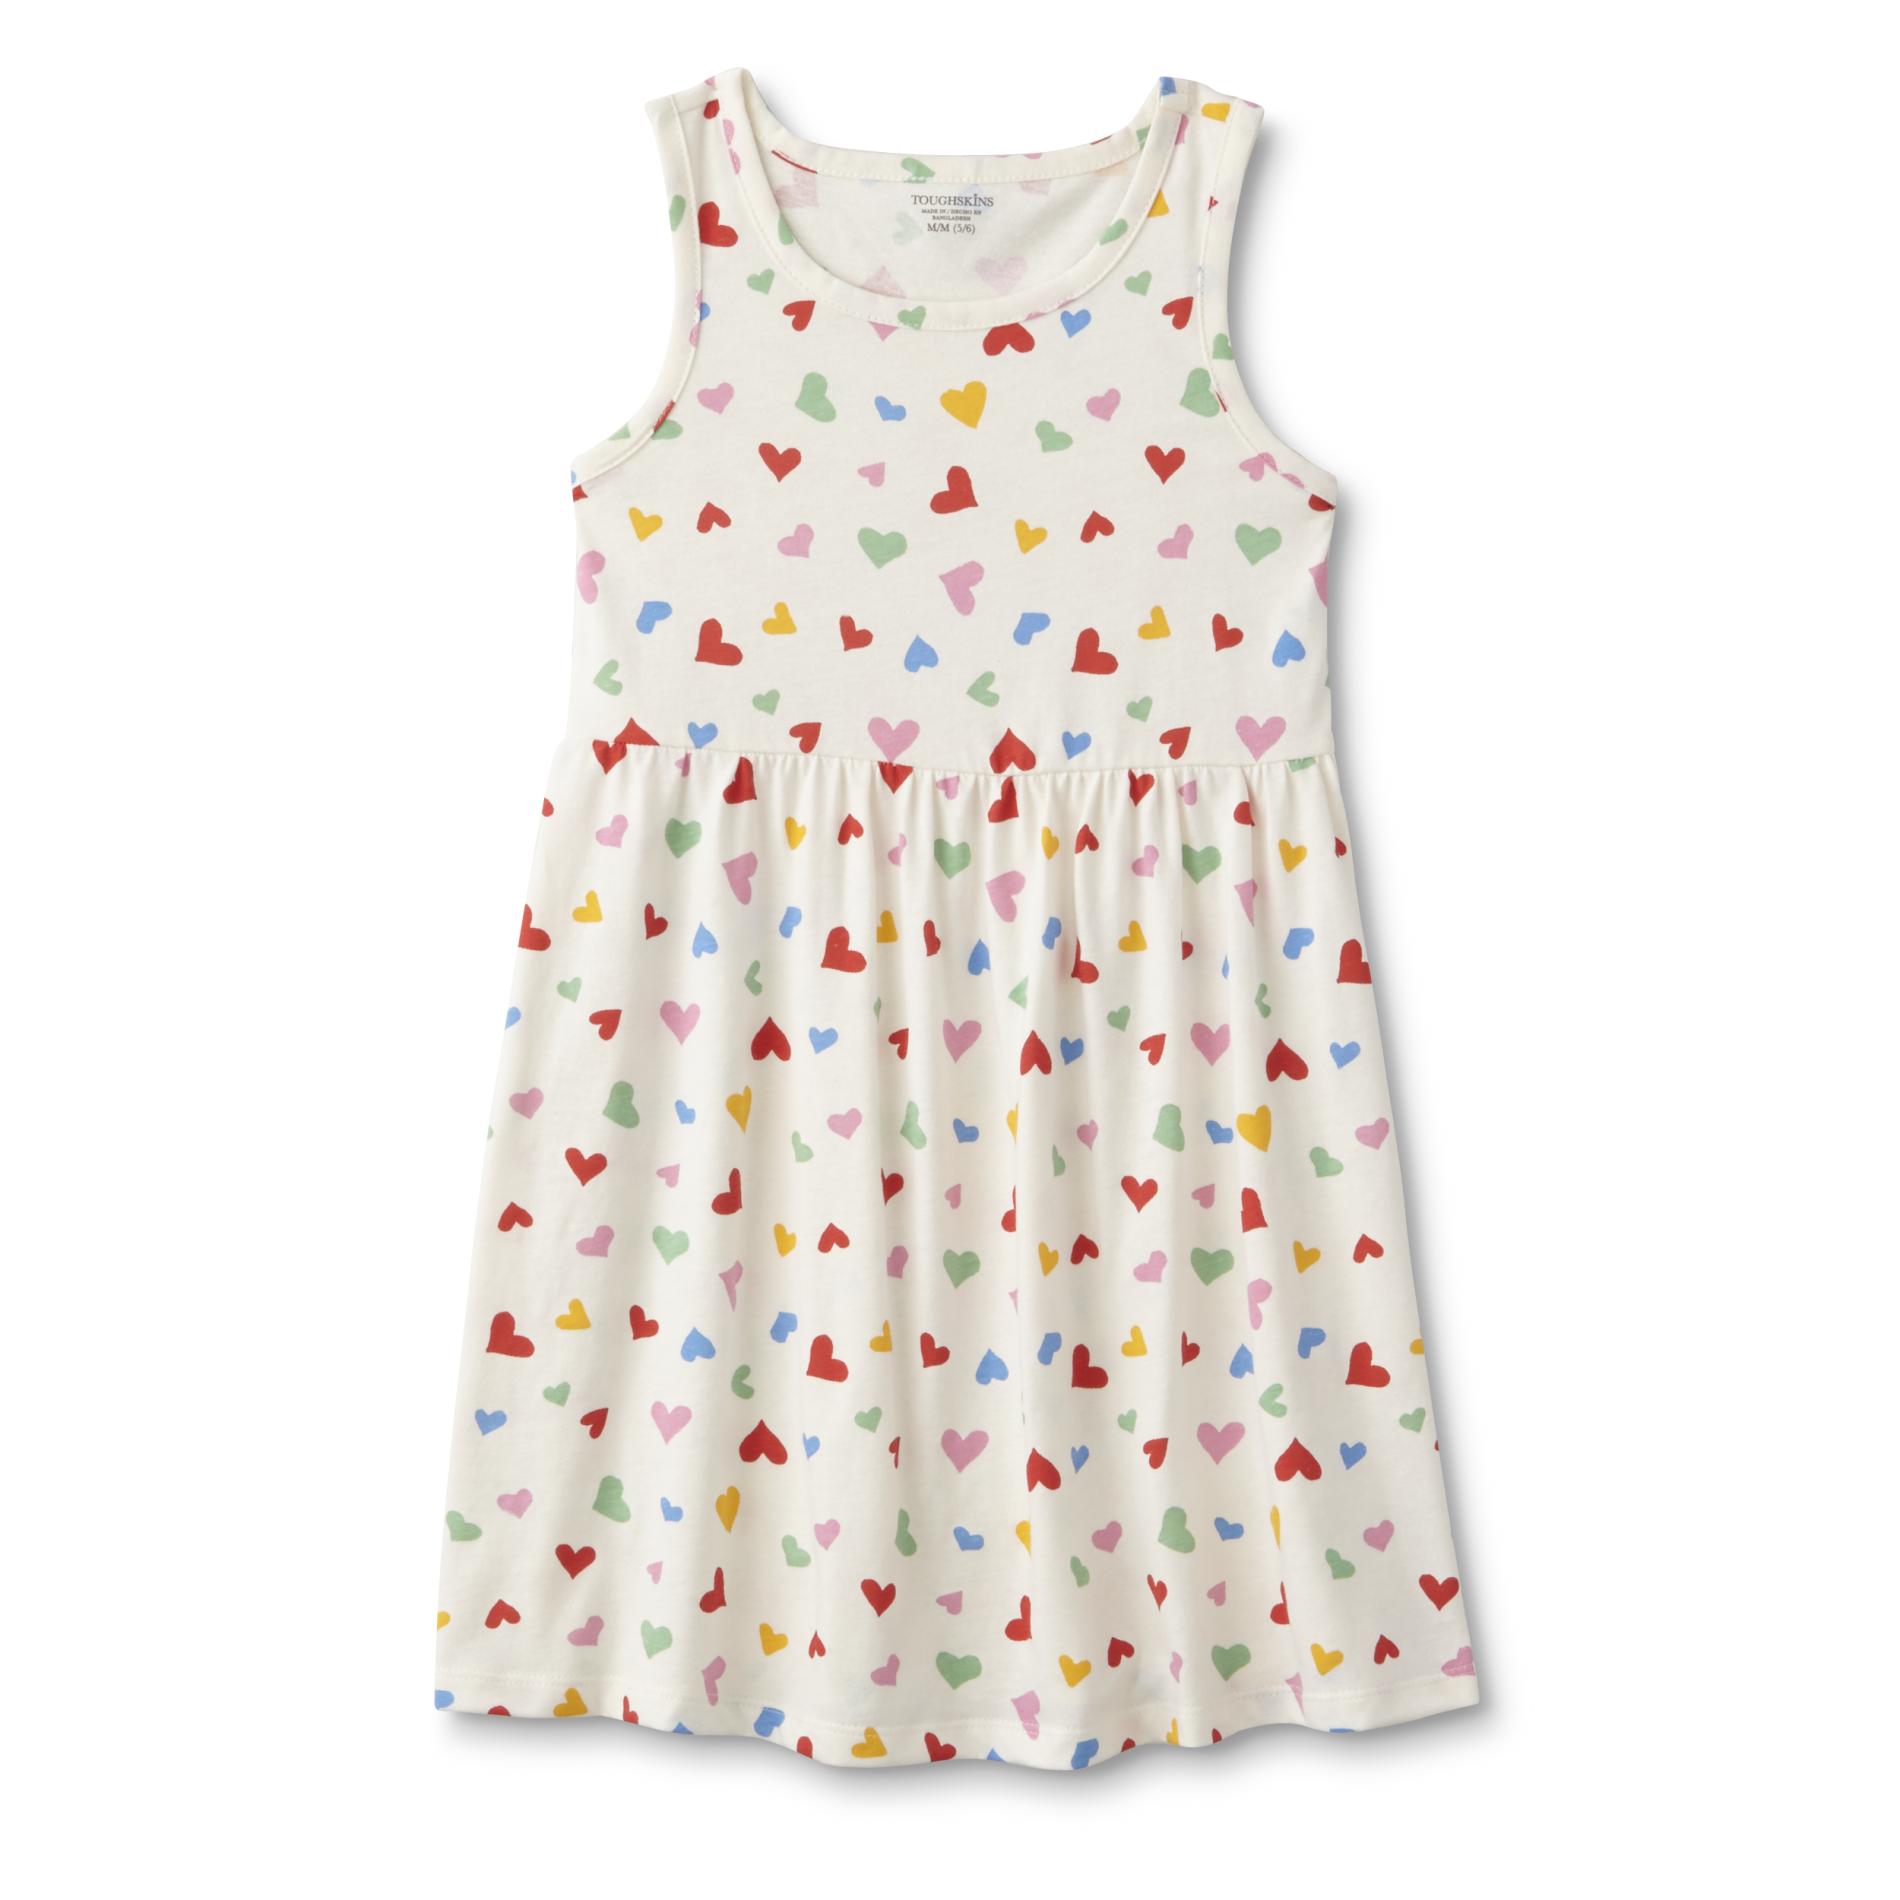 Toughskins Infant & Toddler Girls' Tank Dress - Heart